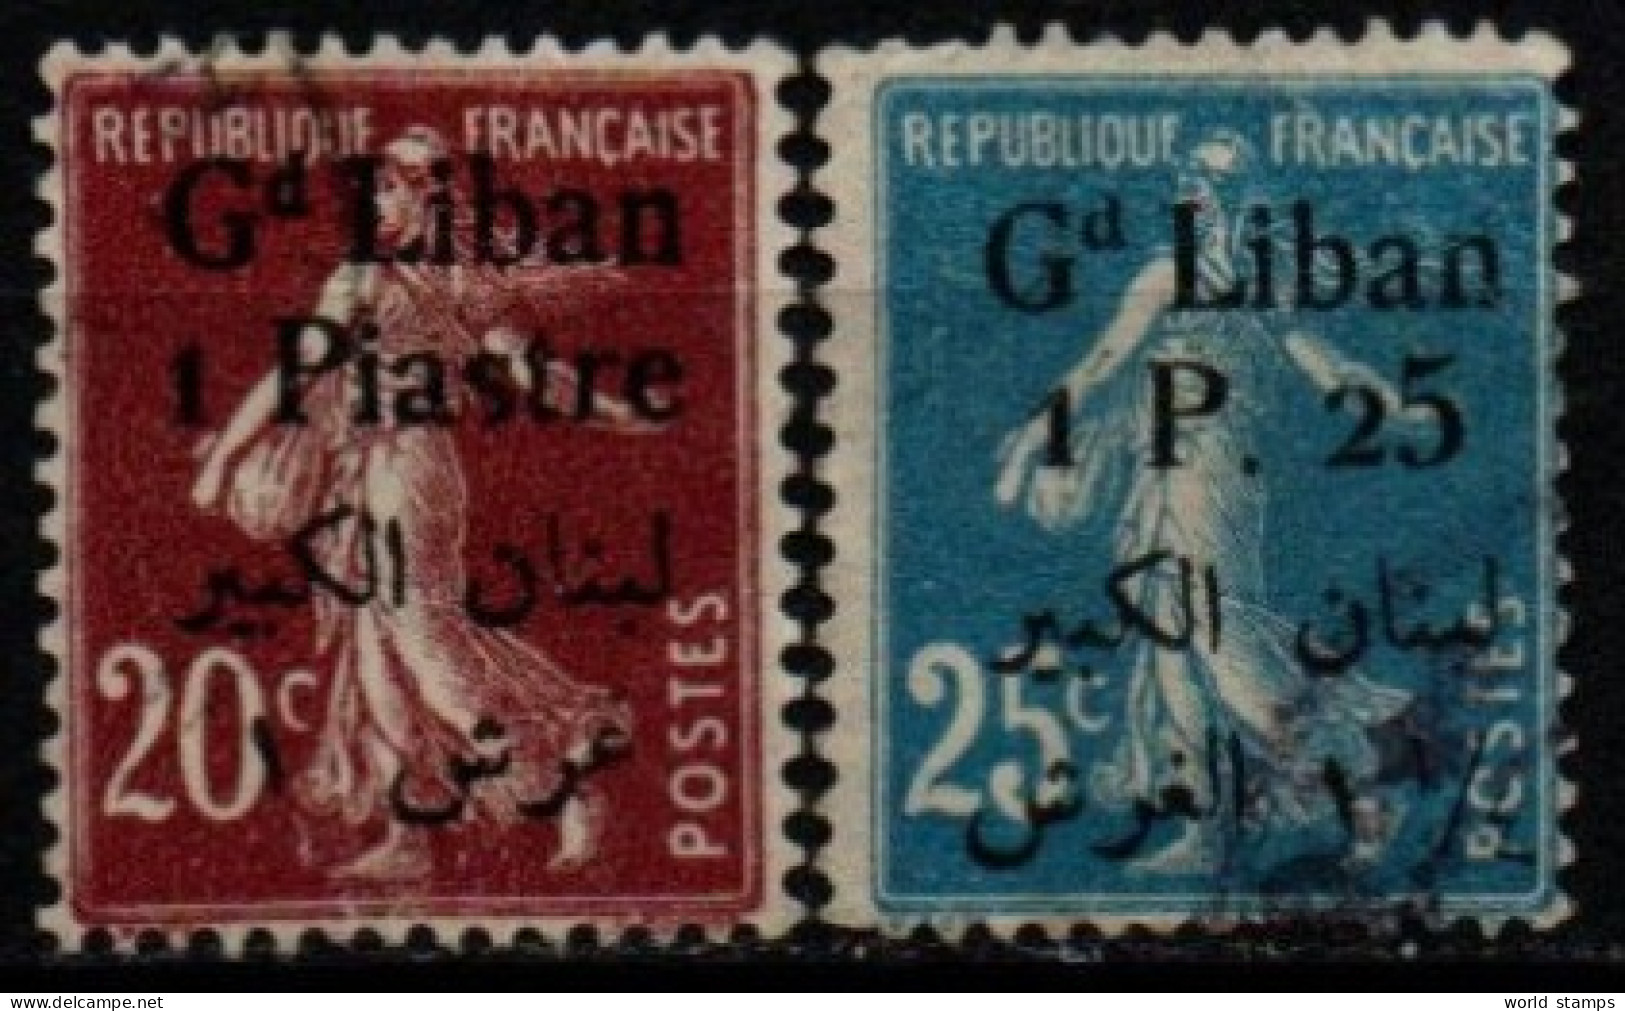 GRAND LIBAN 1924-5 O - Used Stamps